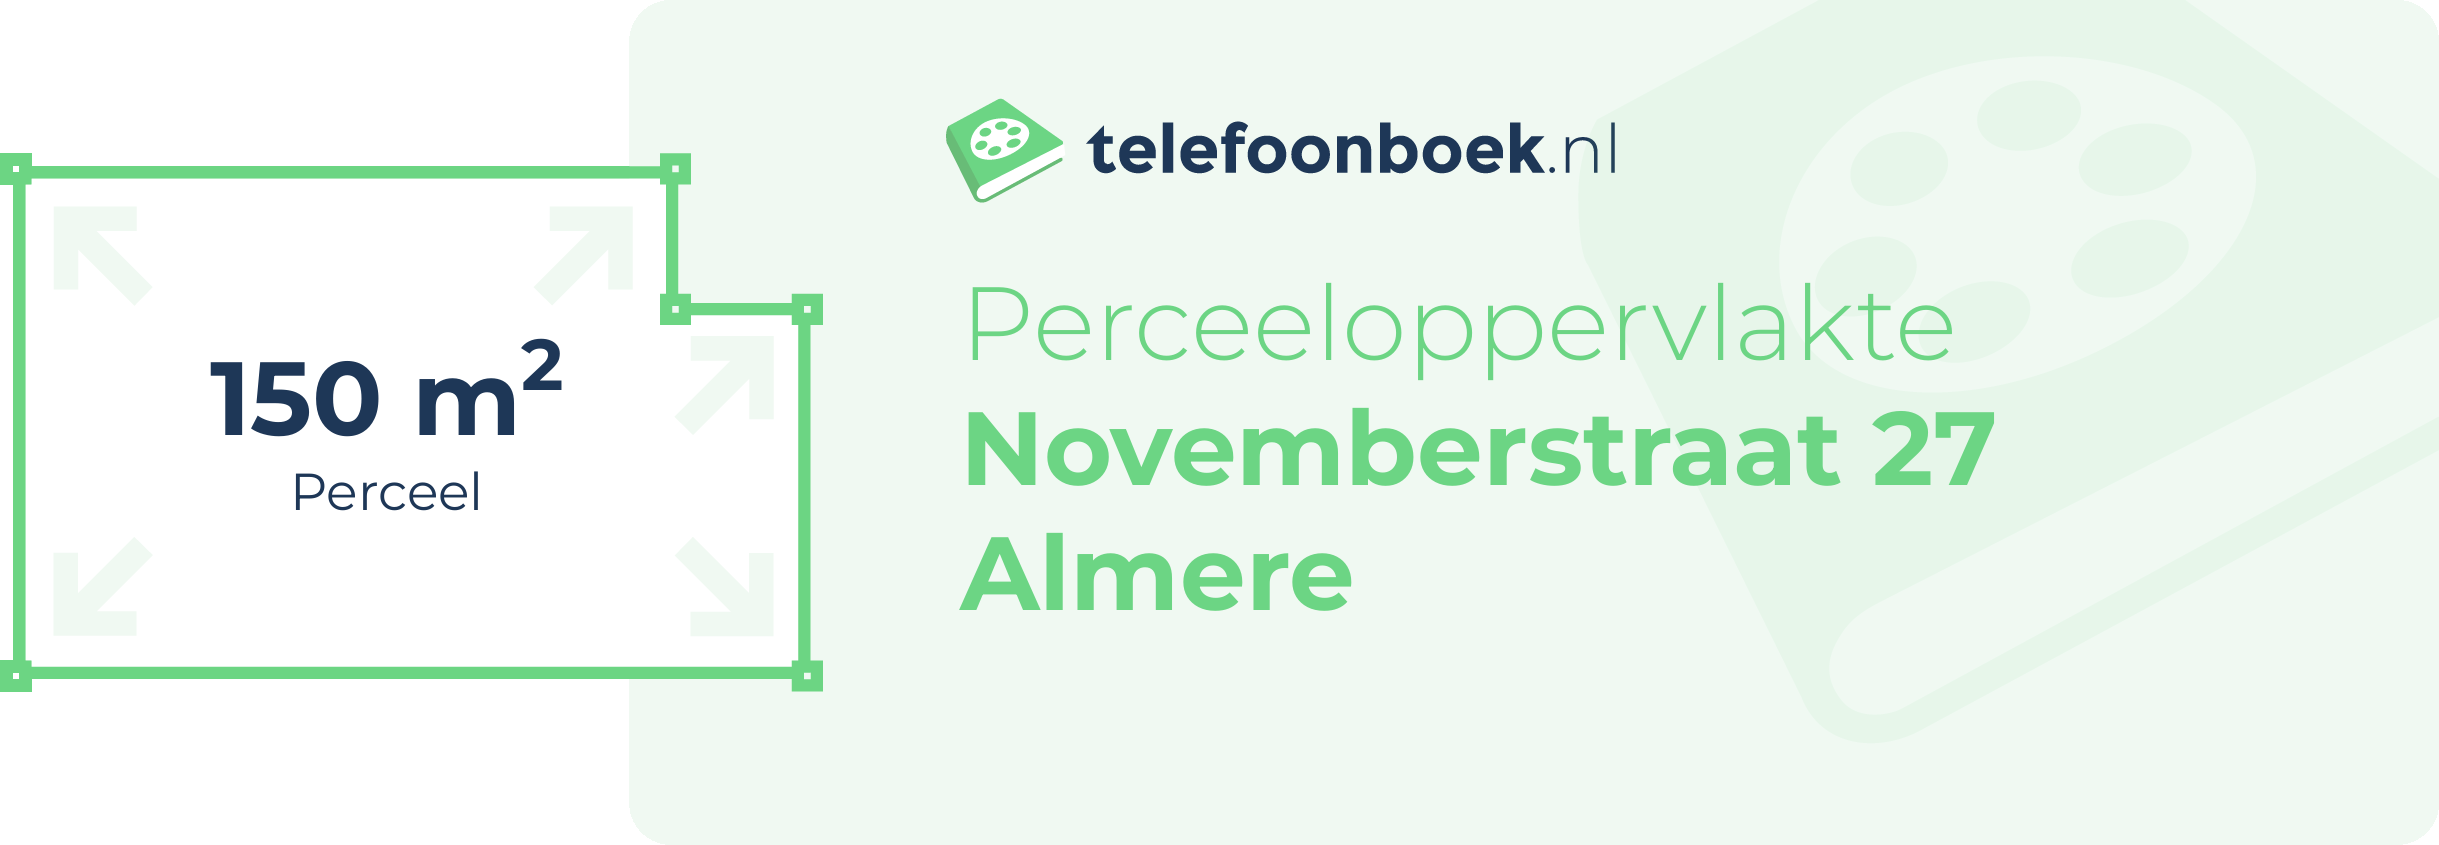 Perceeloppervlakte Novemberstraat 27 Almere